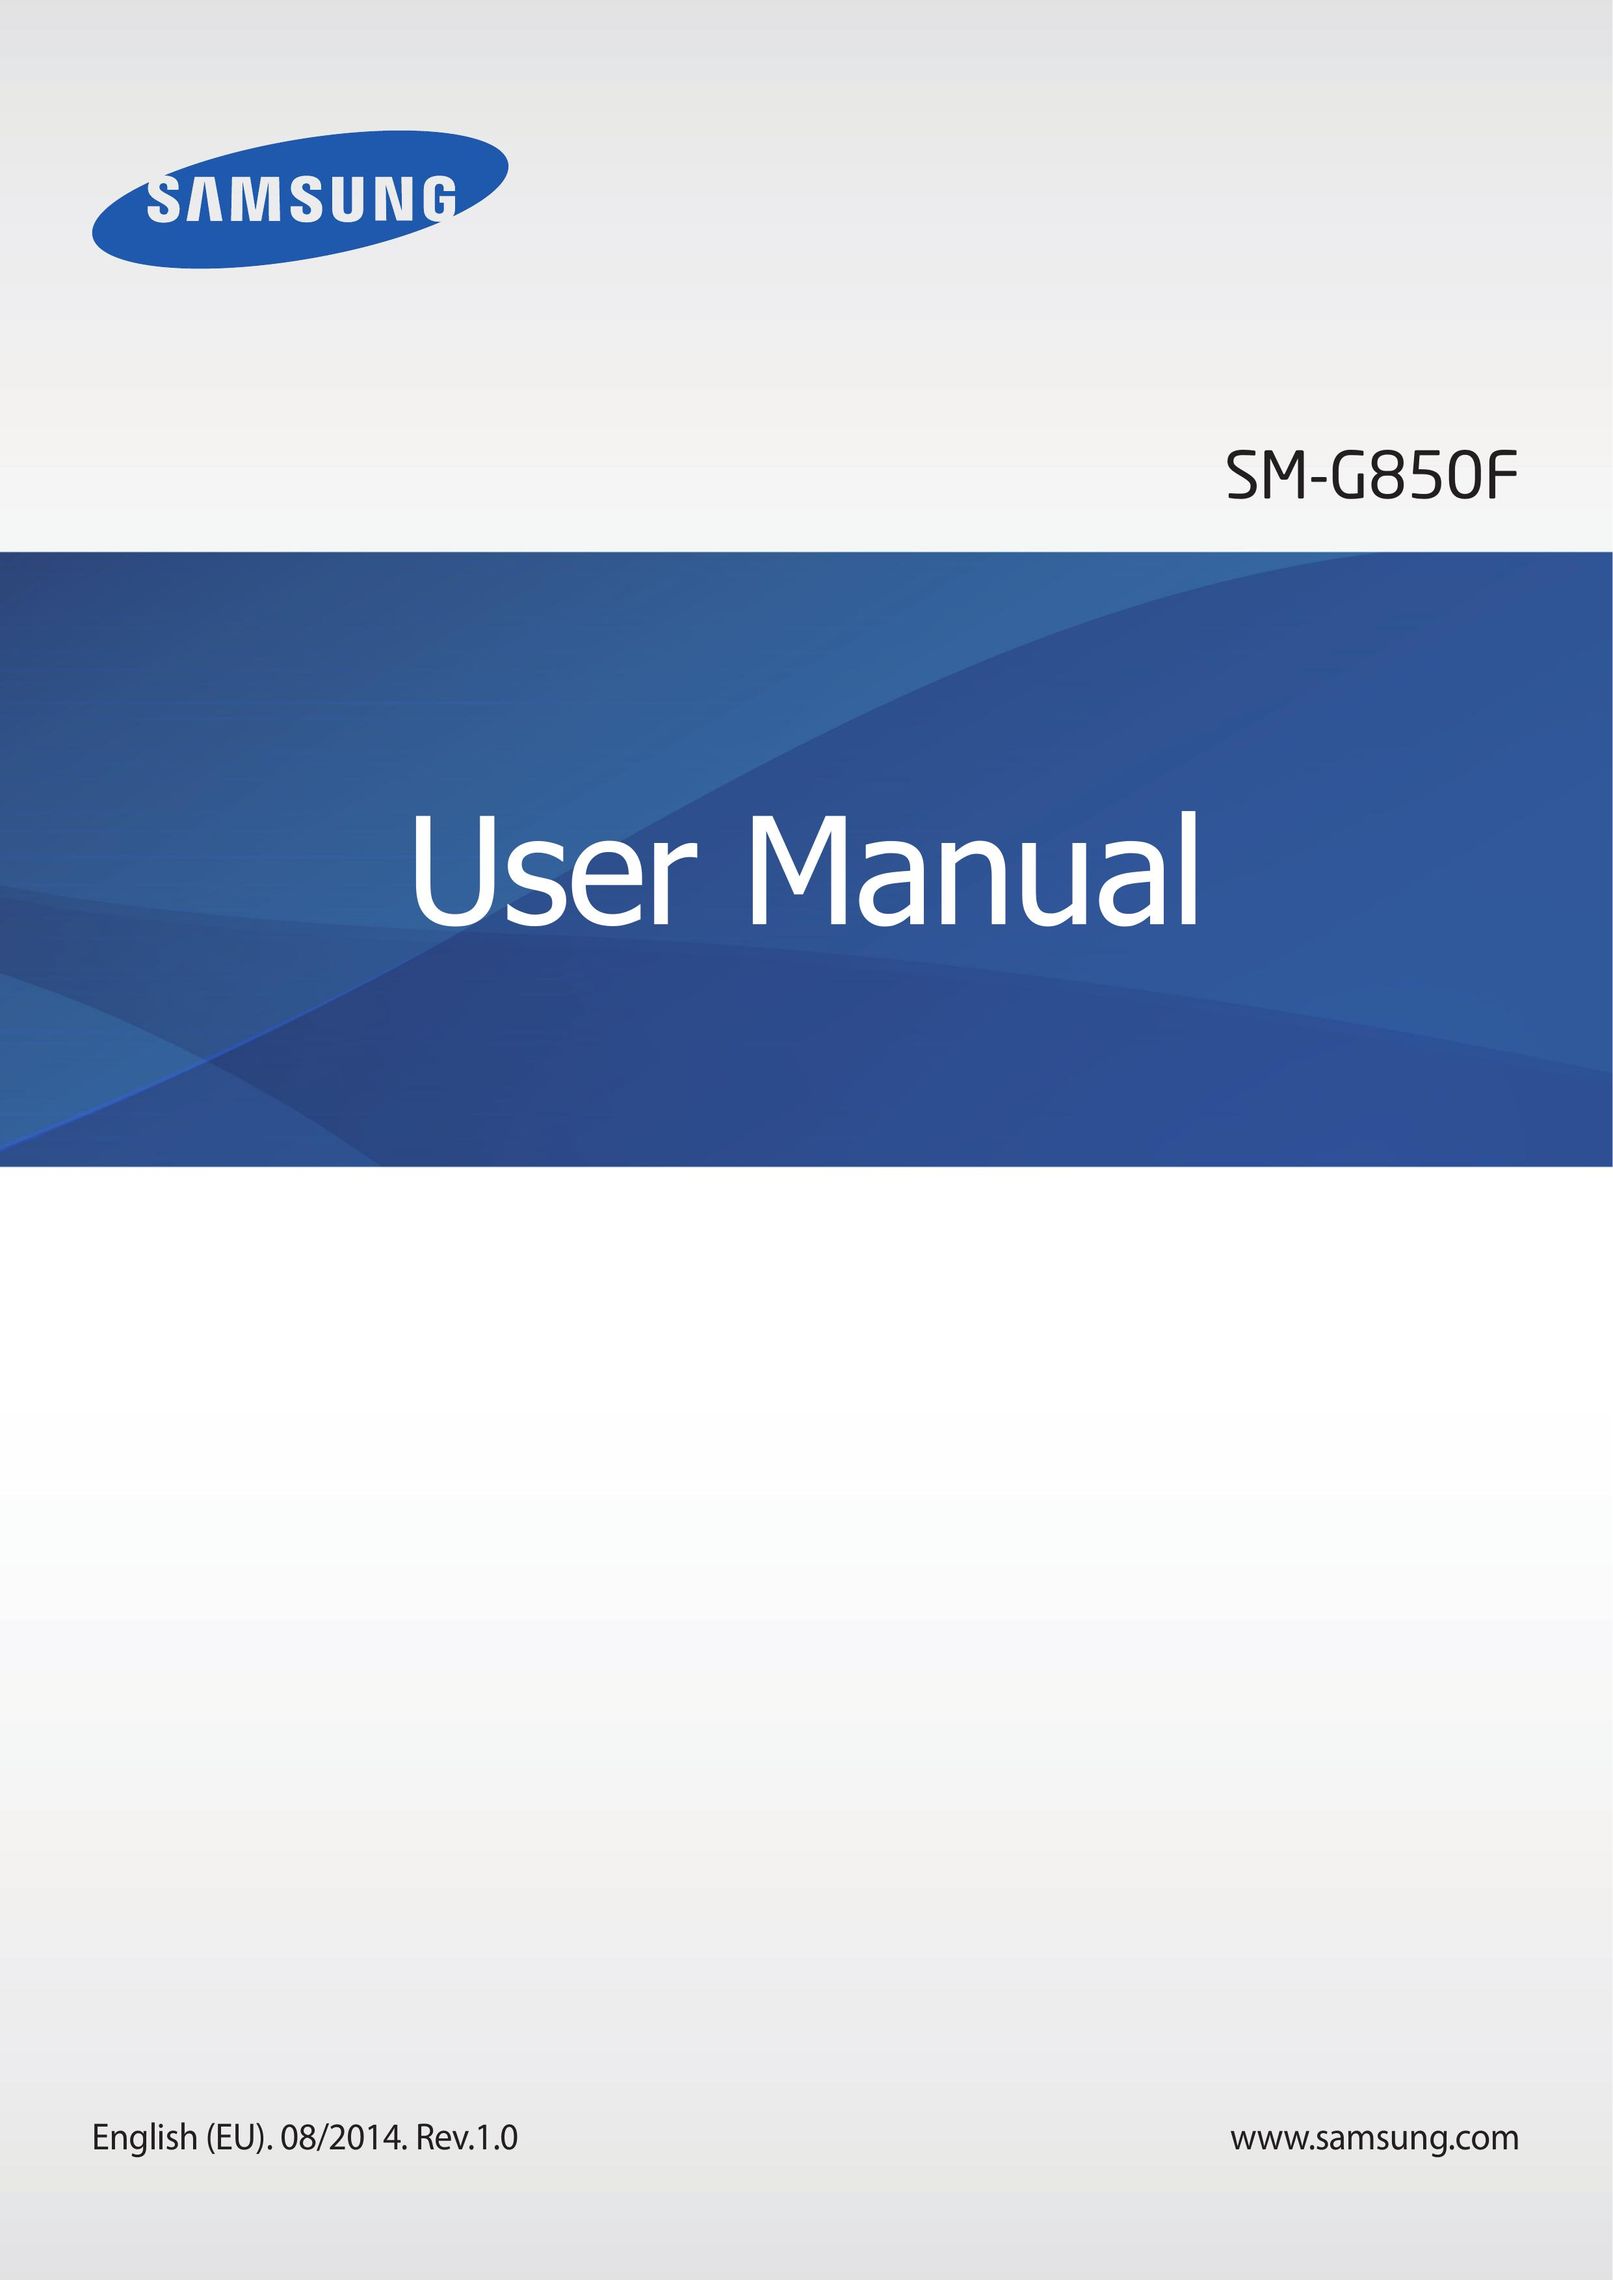 Samsung SM-G850F Graphics Tablet User Manual